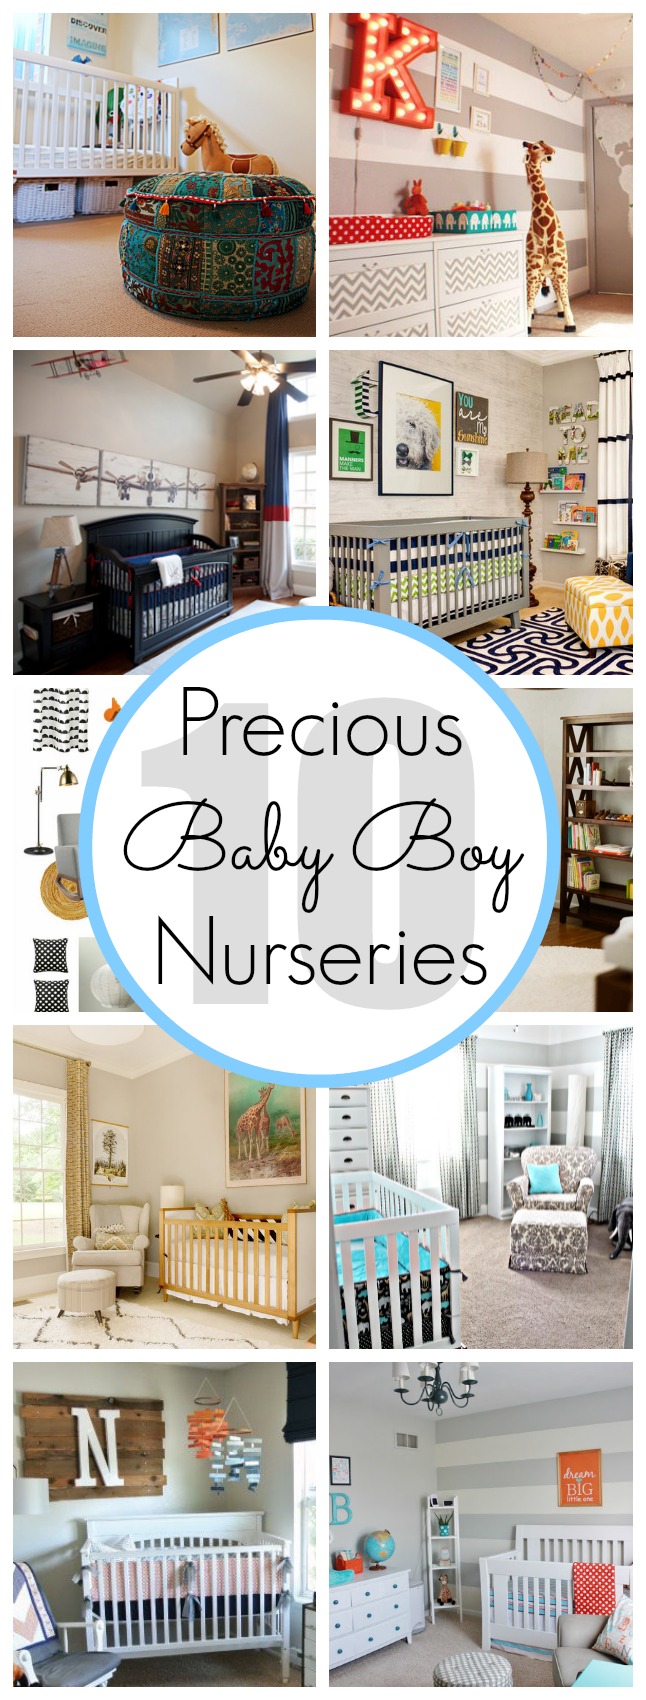 10 Precious Baby Boy Nursery Ideas - www.classyclutter.net